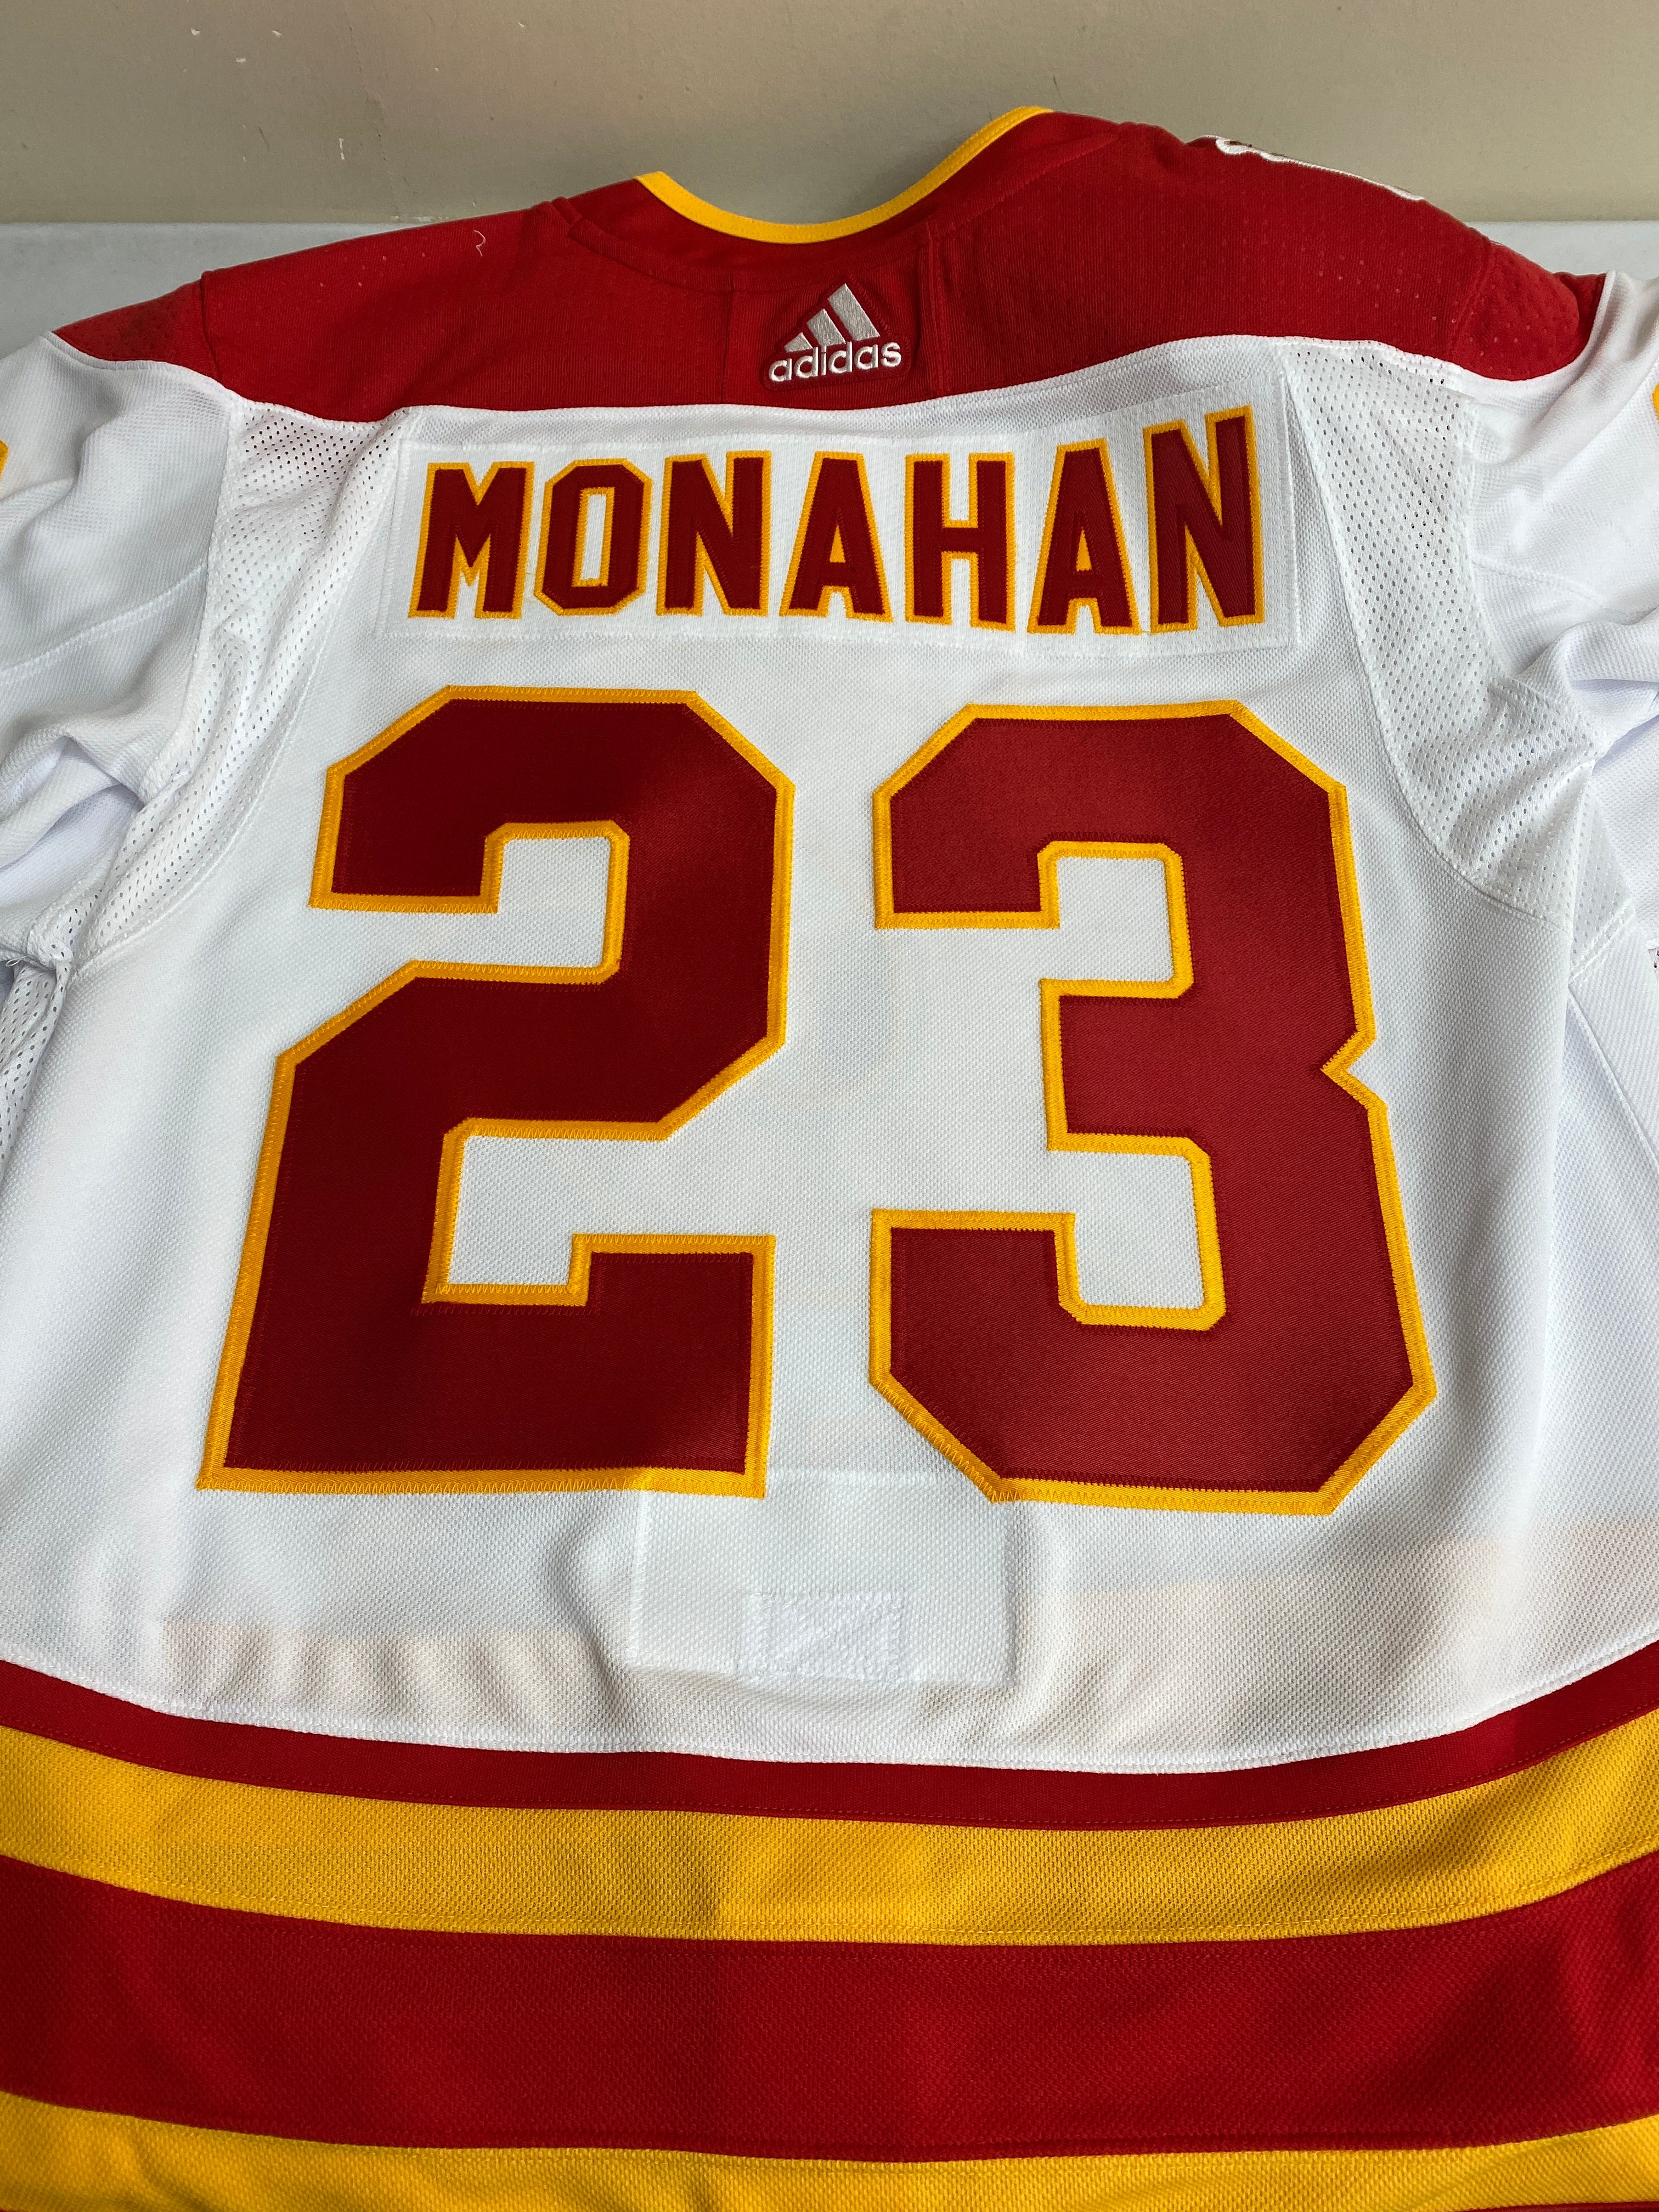 Calgary Flames Sean Monahan Adidas Home Jersey size 56